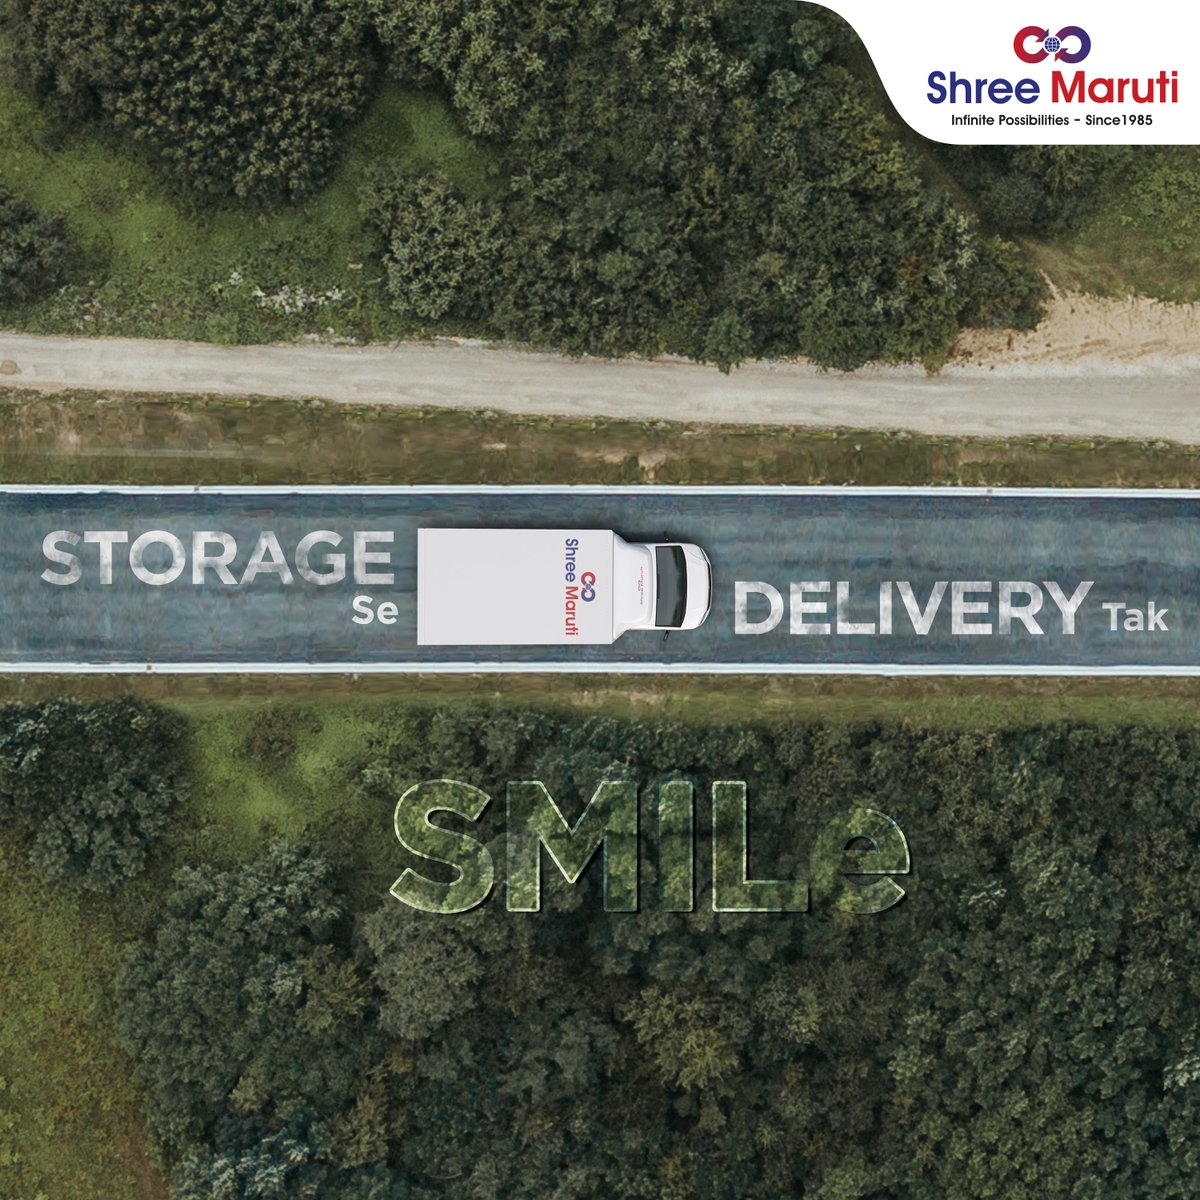 Storage se Delivery Tak #SMILe #Shreemaruti #storagesedeliverytak #shreemarutilogistics #ecommerce #quickdelivery #deliveryservice #FastTrackFestivities